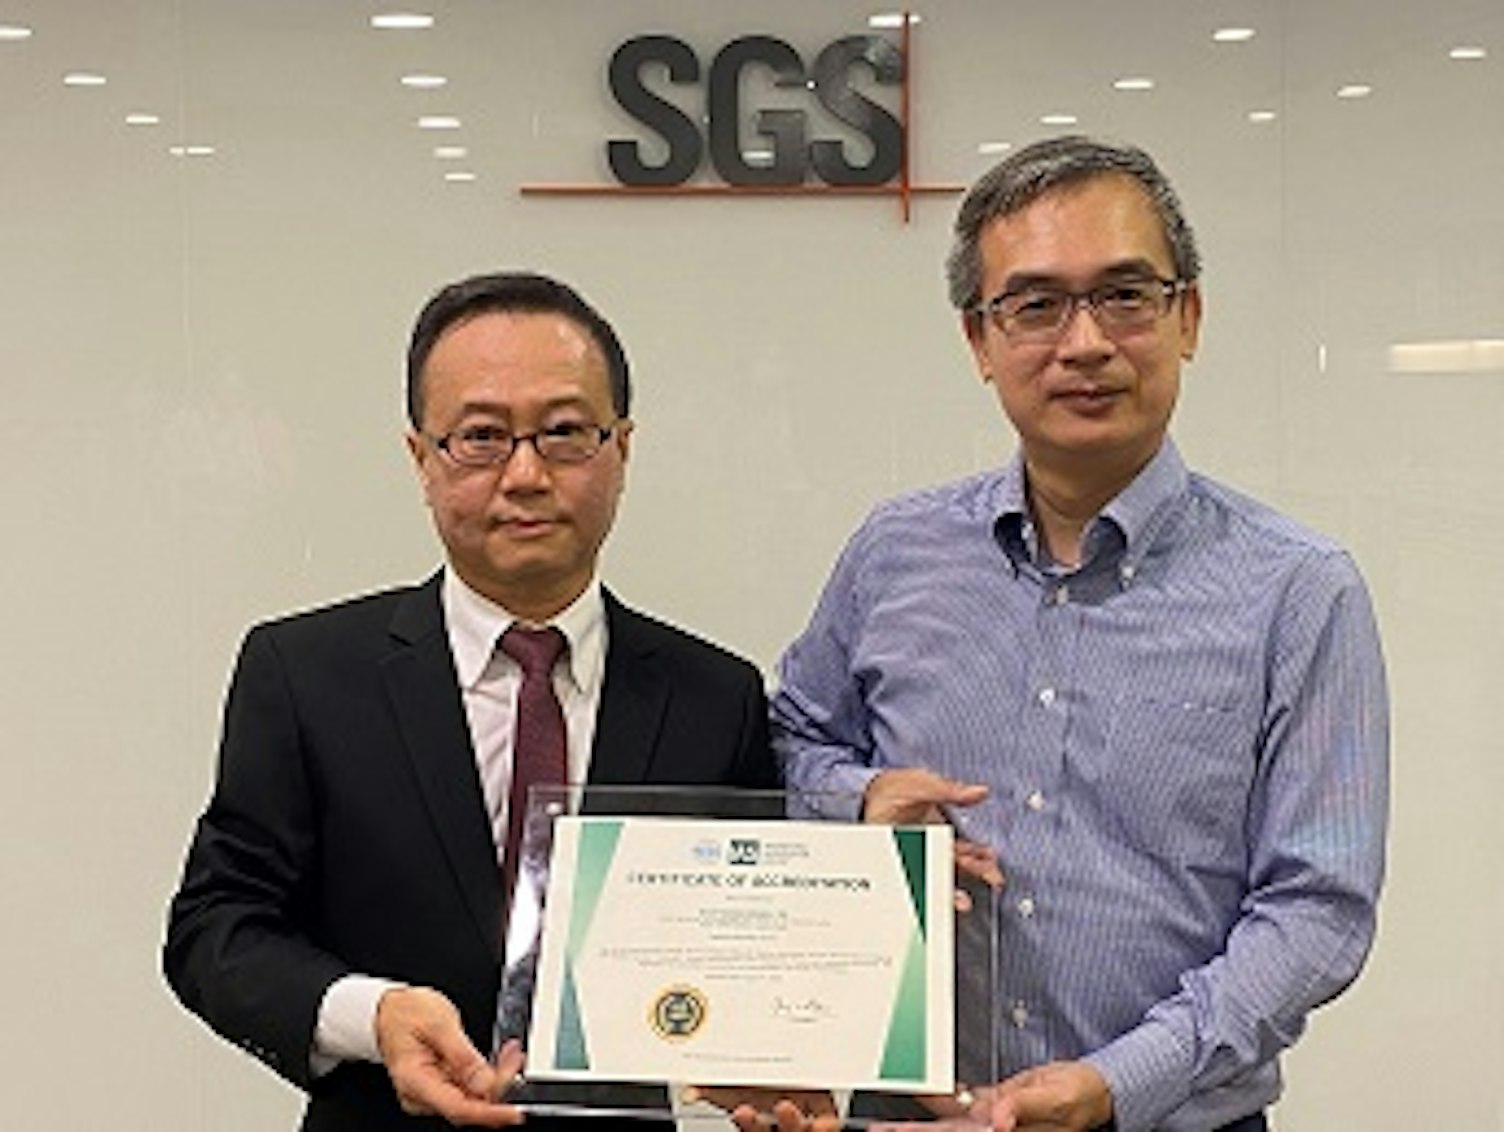 SGS_IAS accreditation